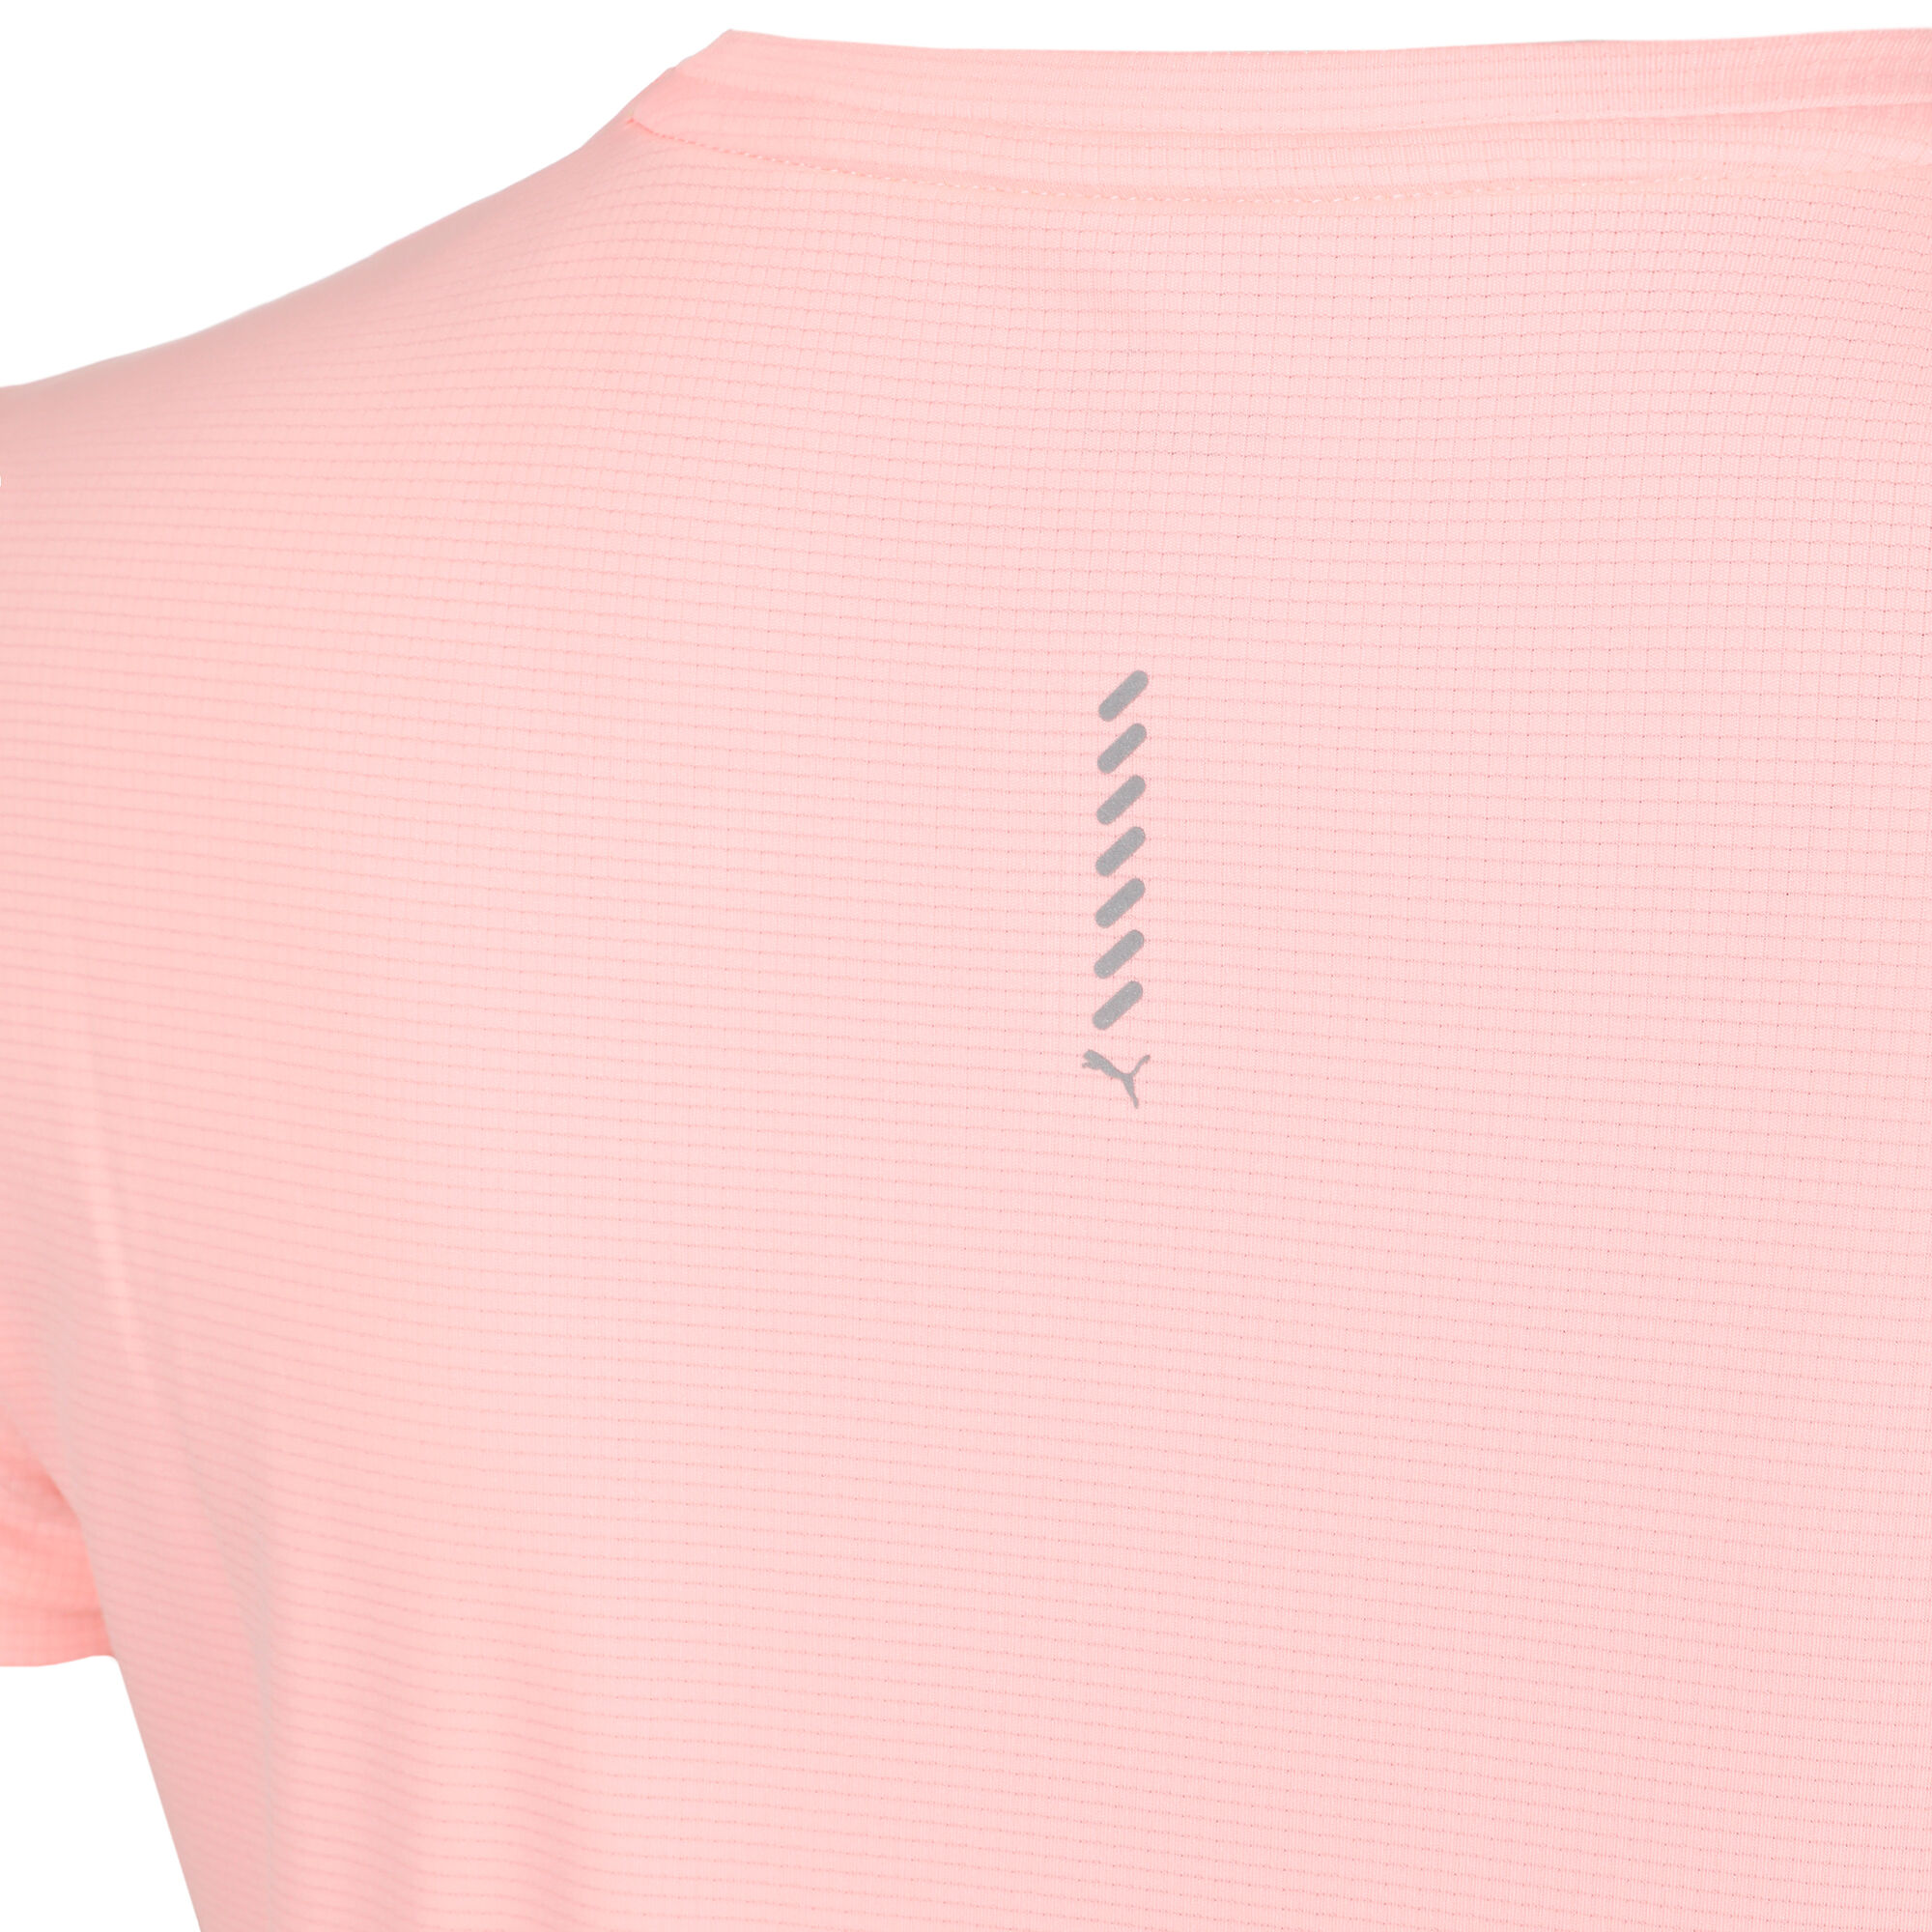 Buy Puma Running Point Shirts Run Women online Pink Favorite Running COM 